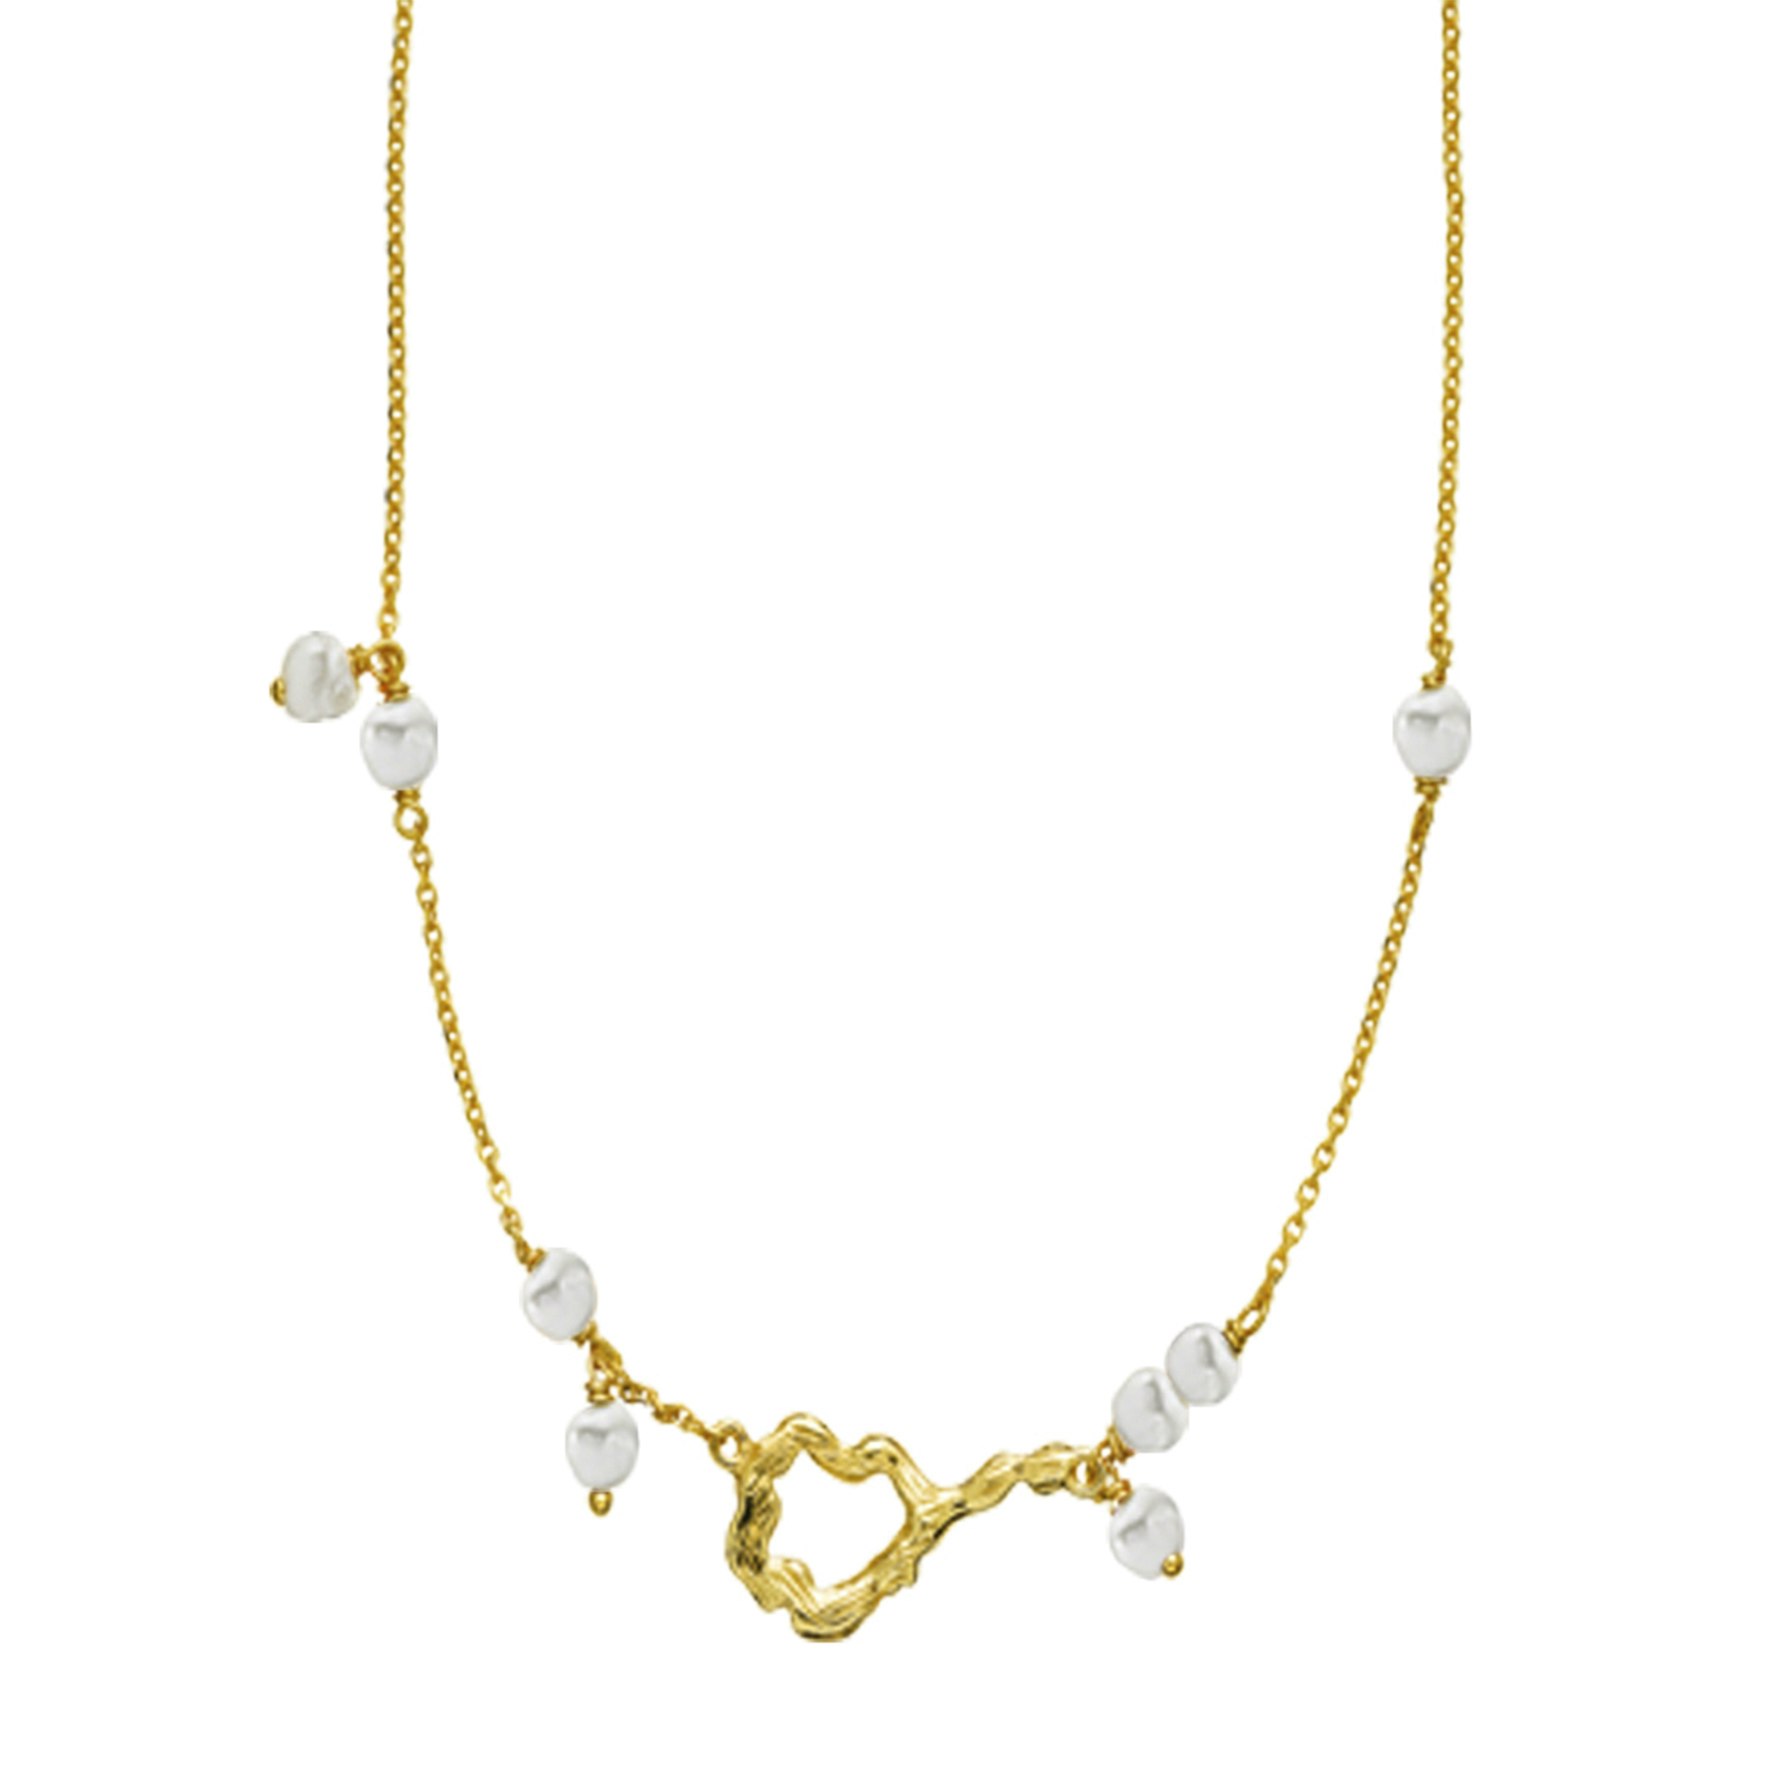 Lærke Bentsen By Sistie Necklace With Pearls från Sistie i Förgyllt-Silver Sterling 925